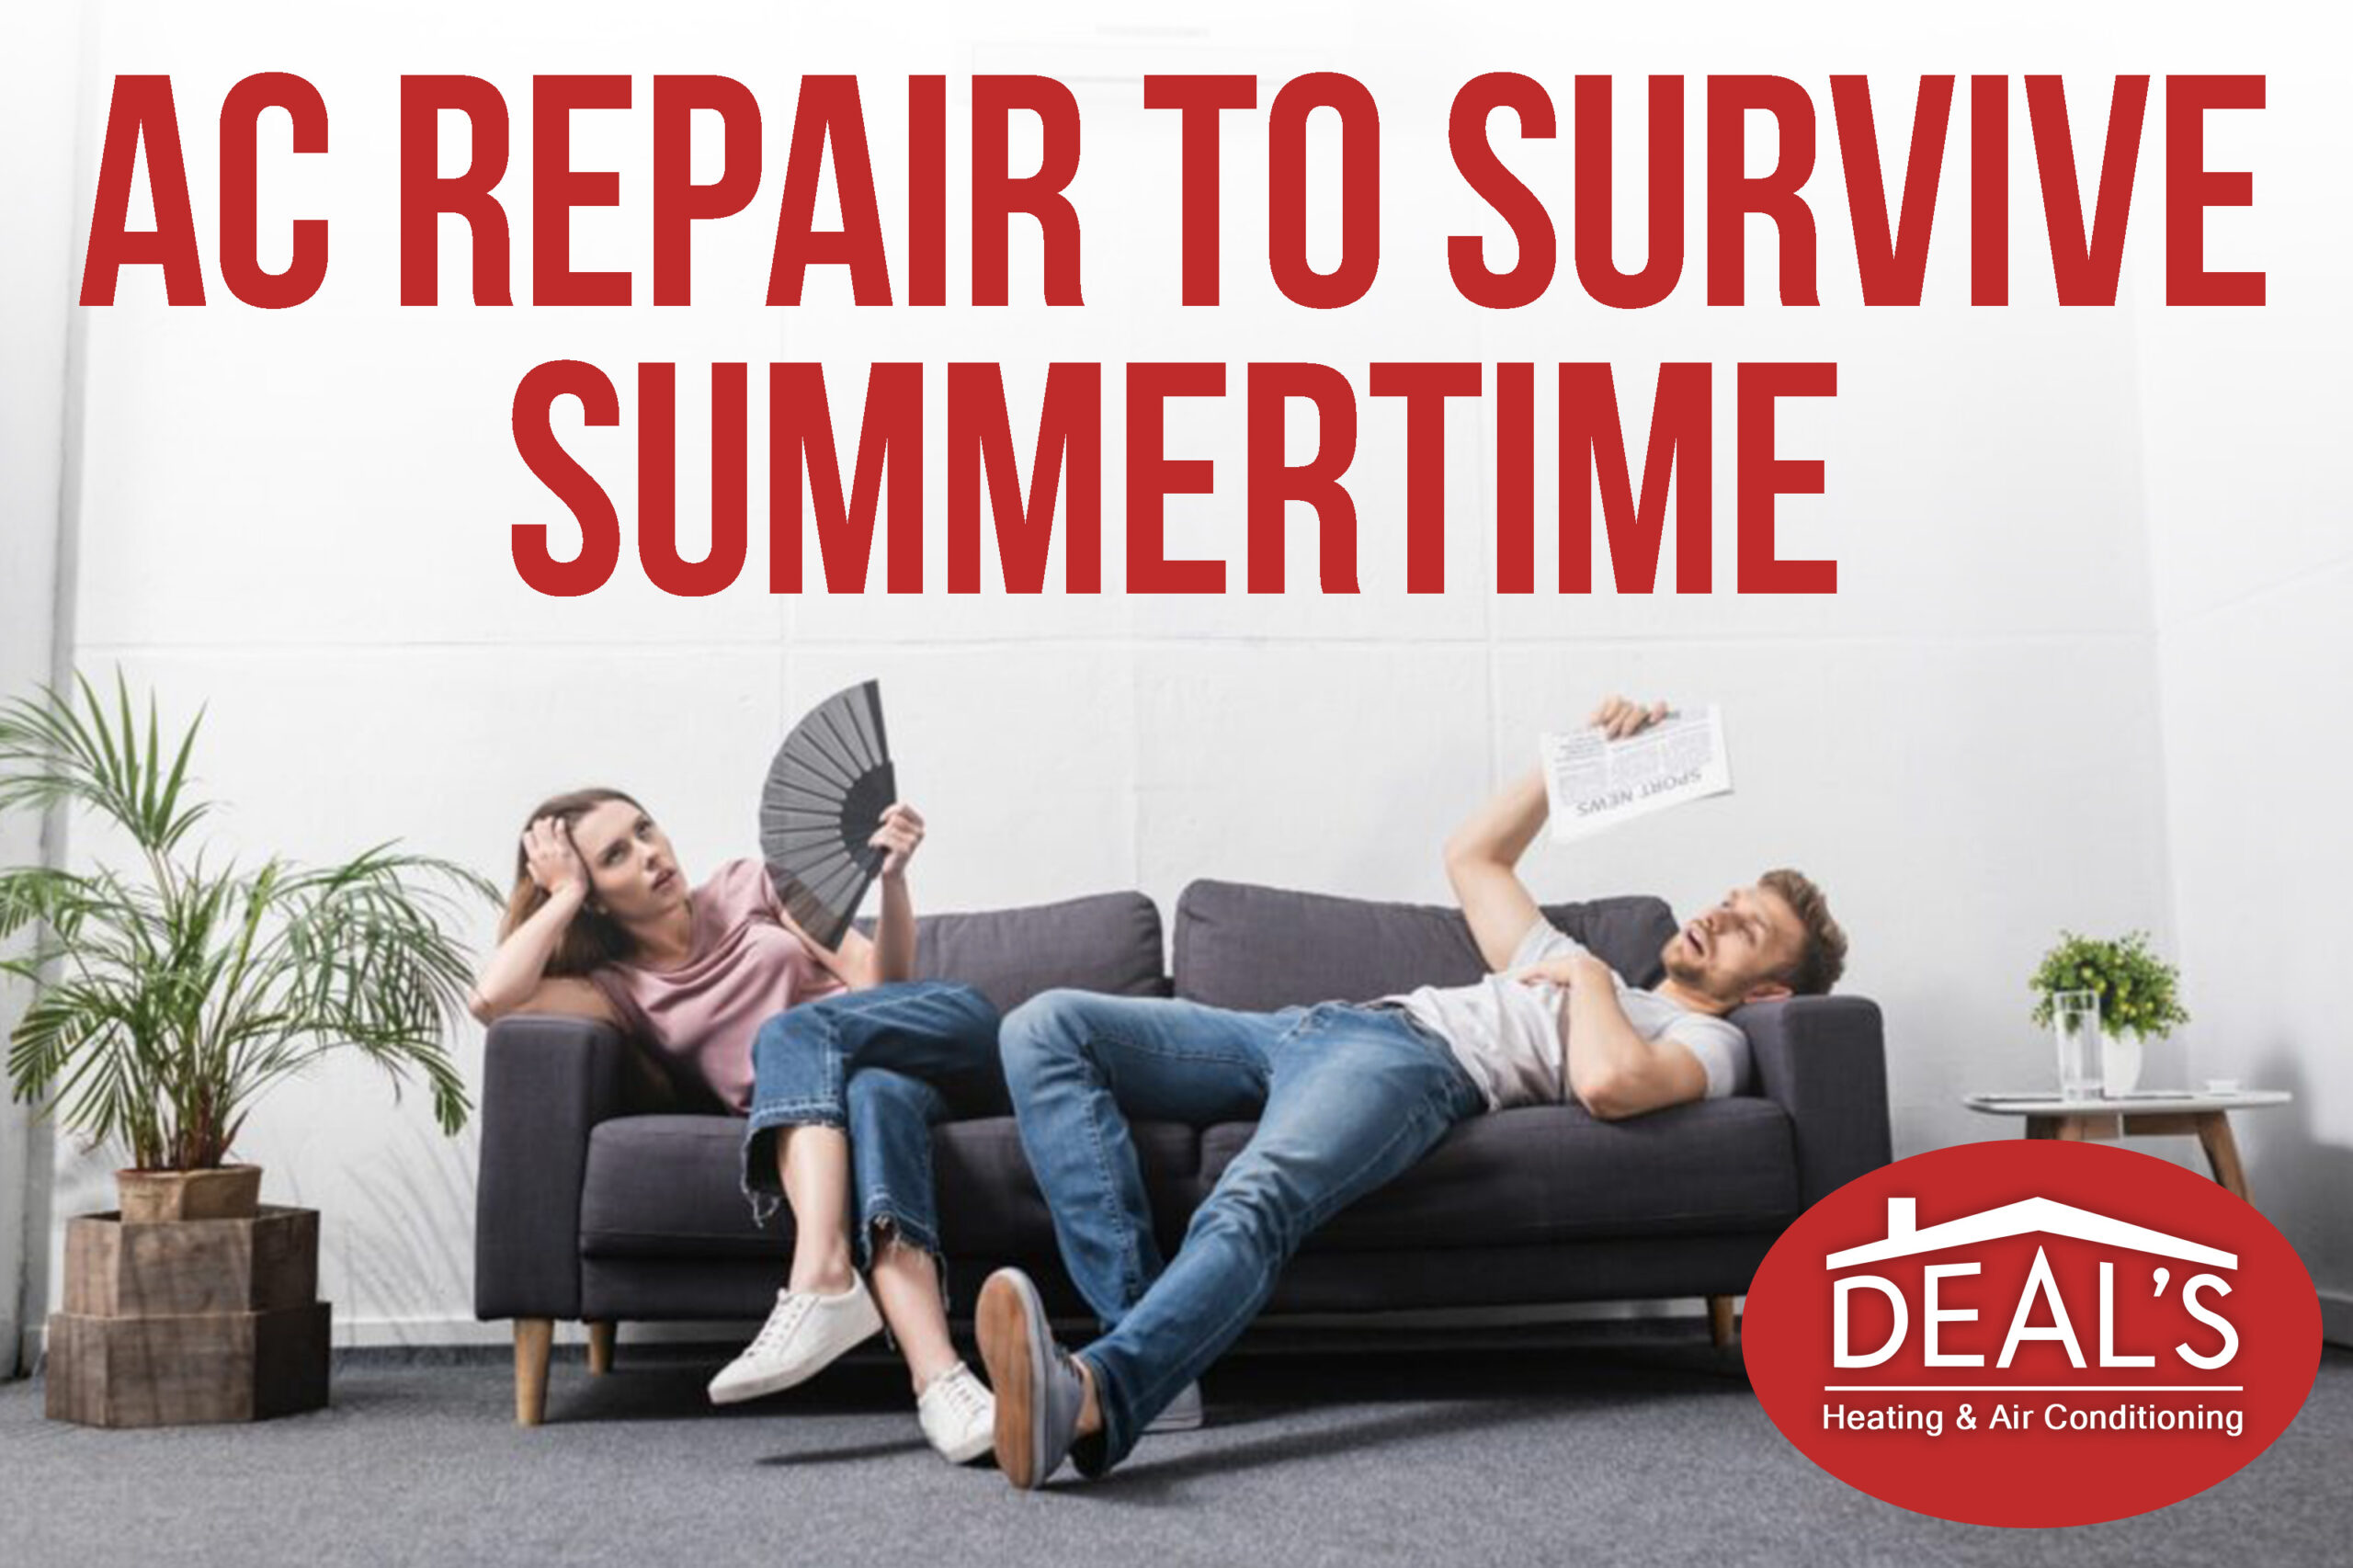 AC Repair To Survive Summertime